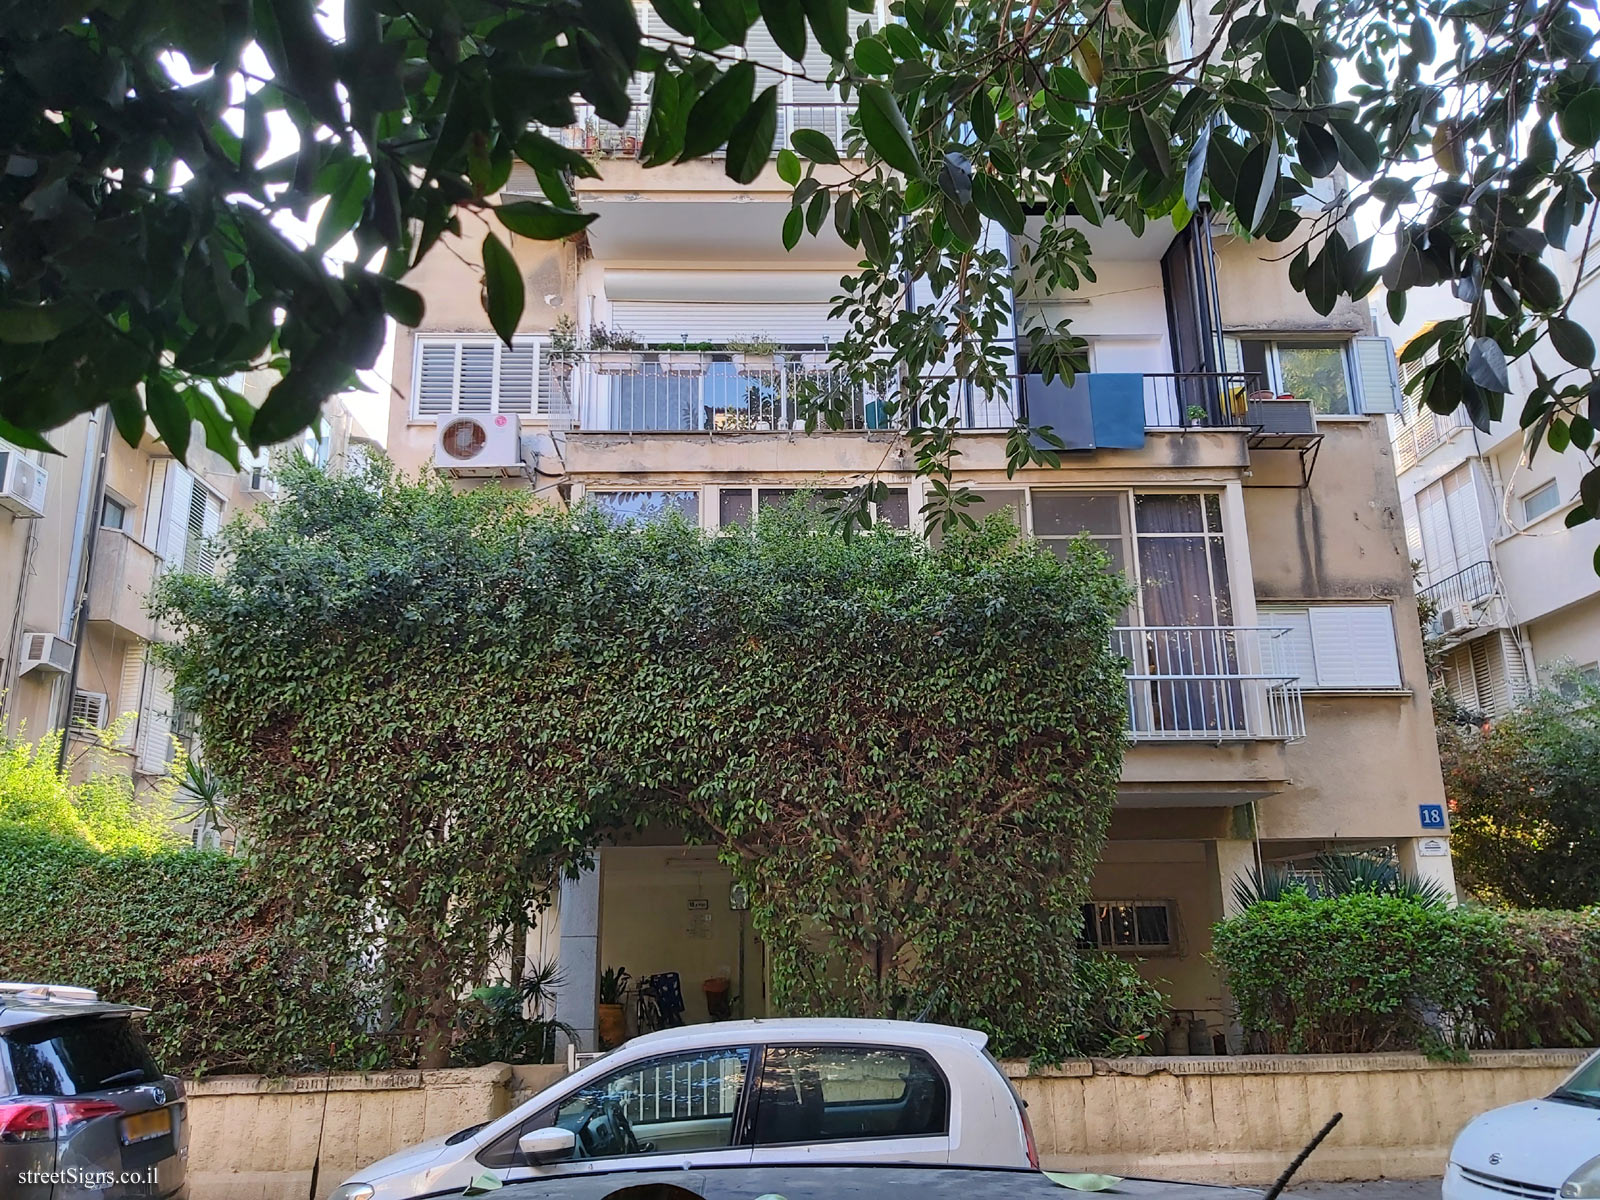 The house of Bracha Tzfira - Ha-Kalir St 18, Tel Aviv-Yafo, Israel